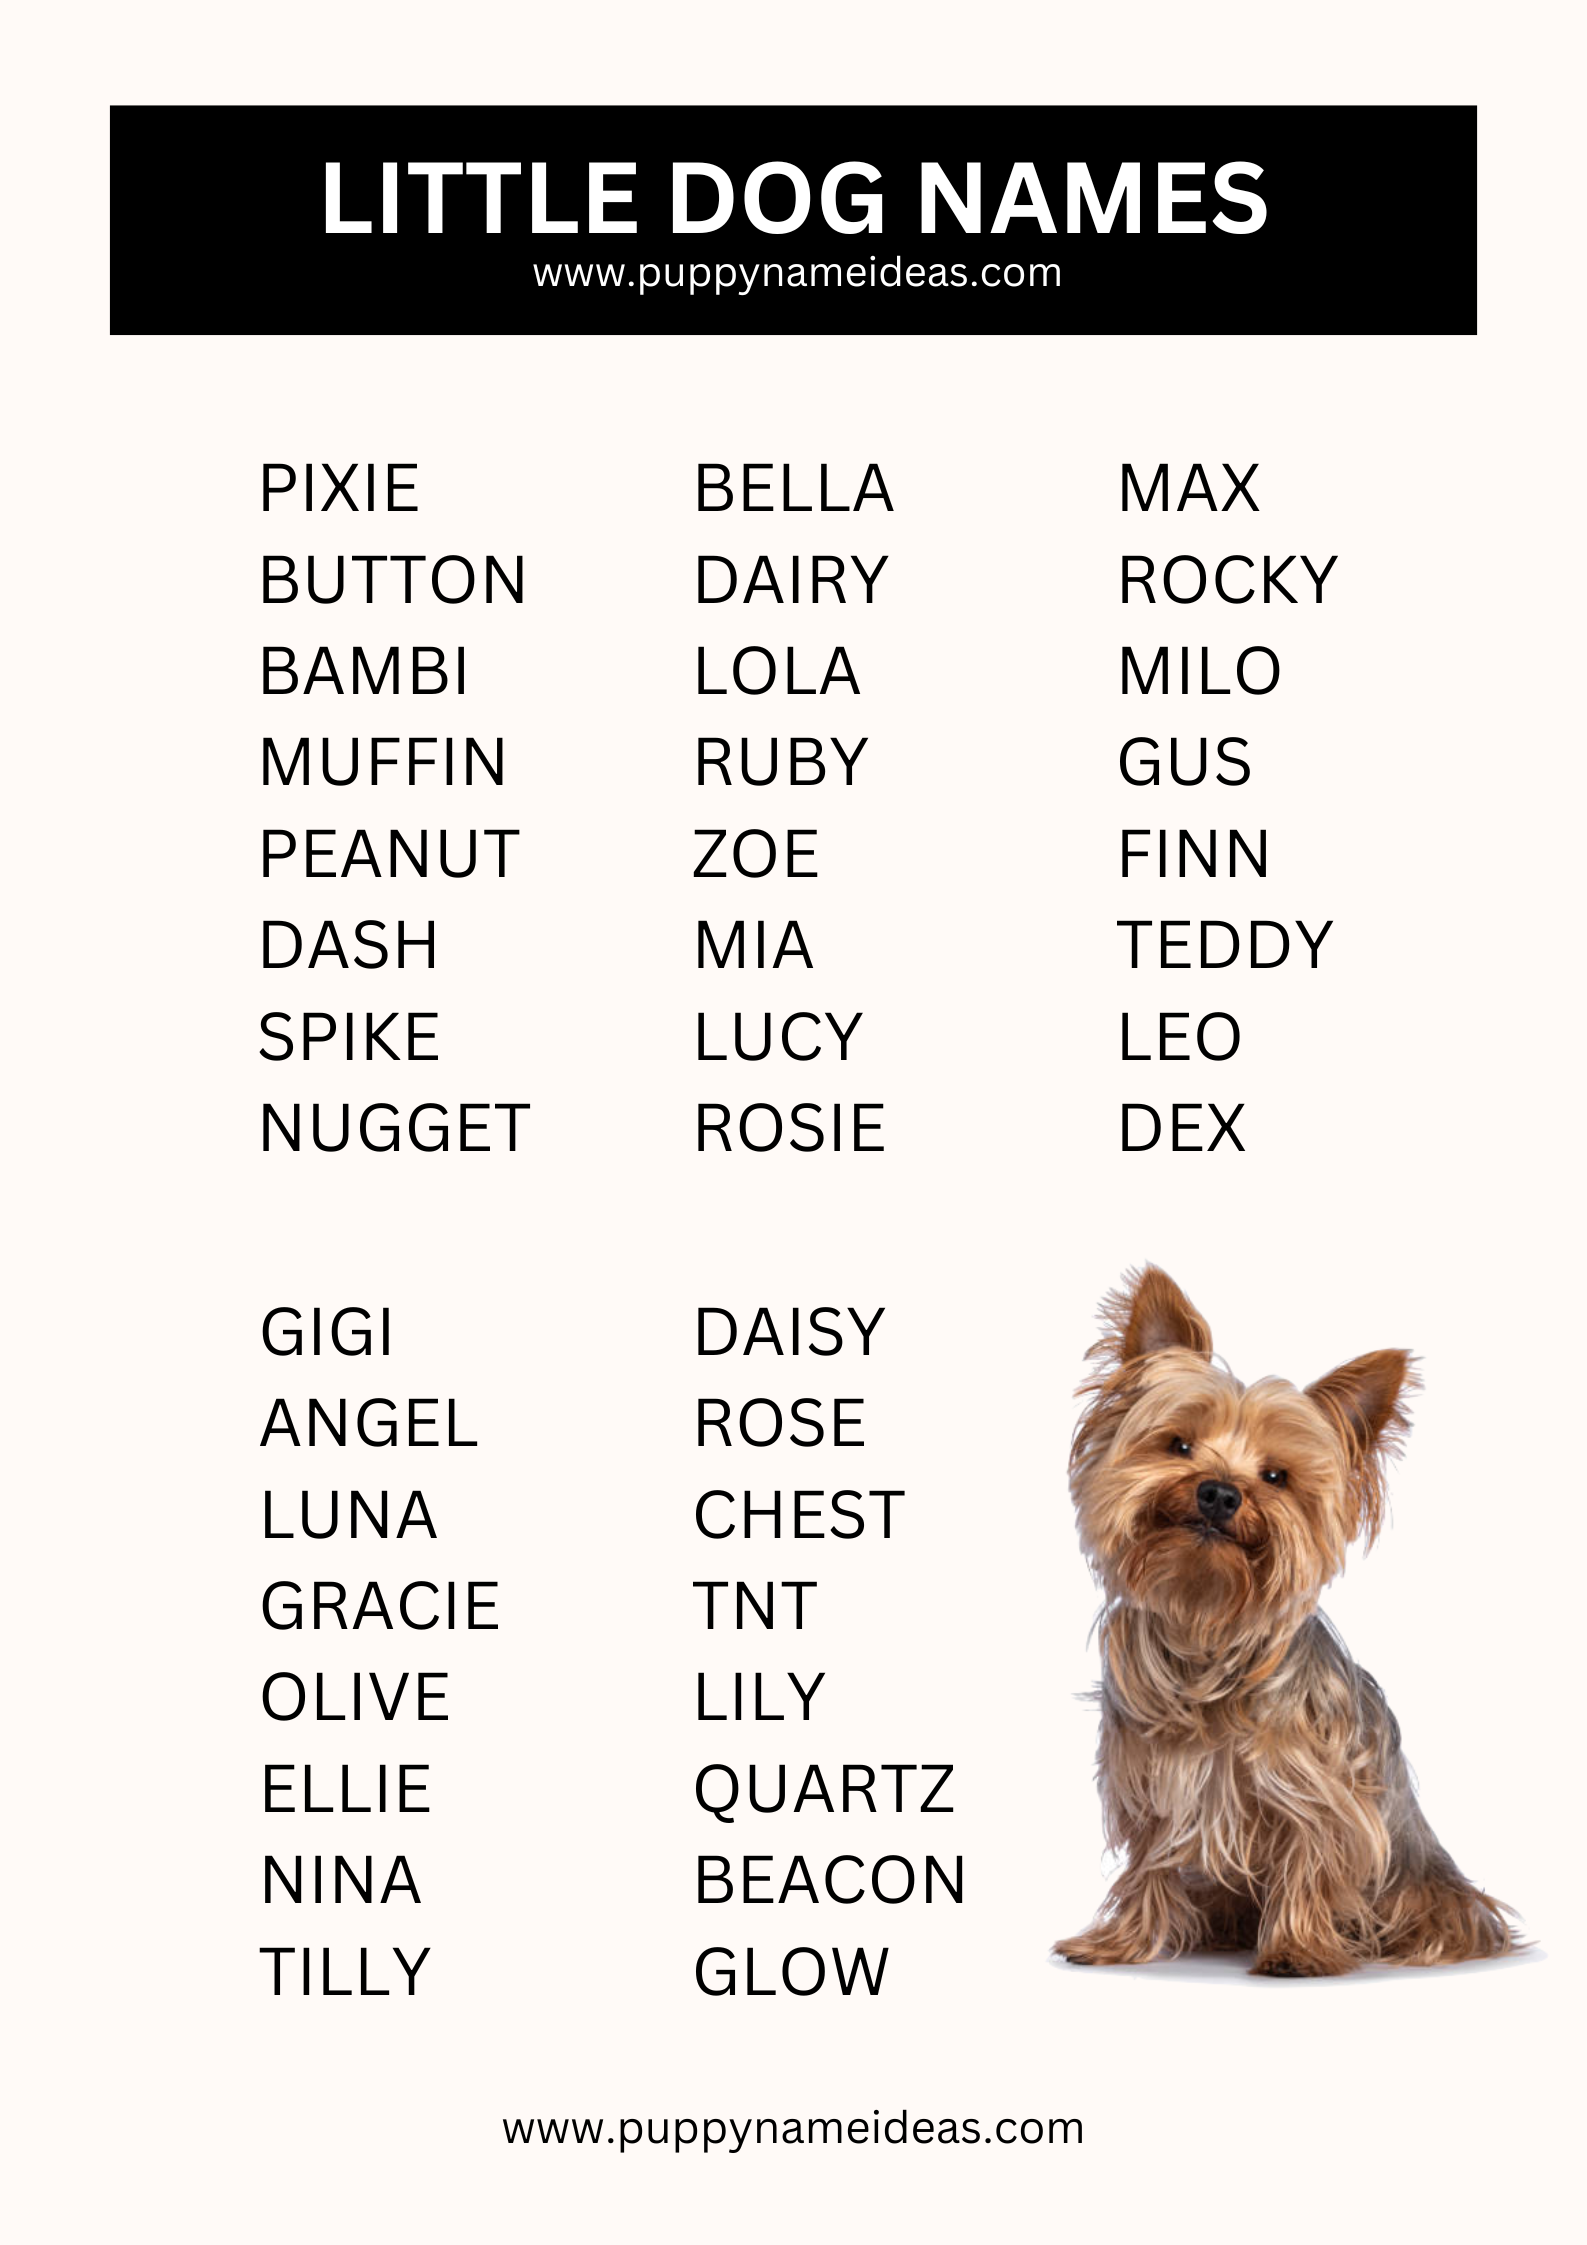 List Of Little Dog Names